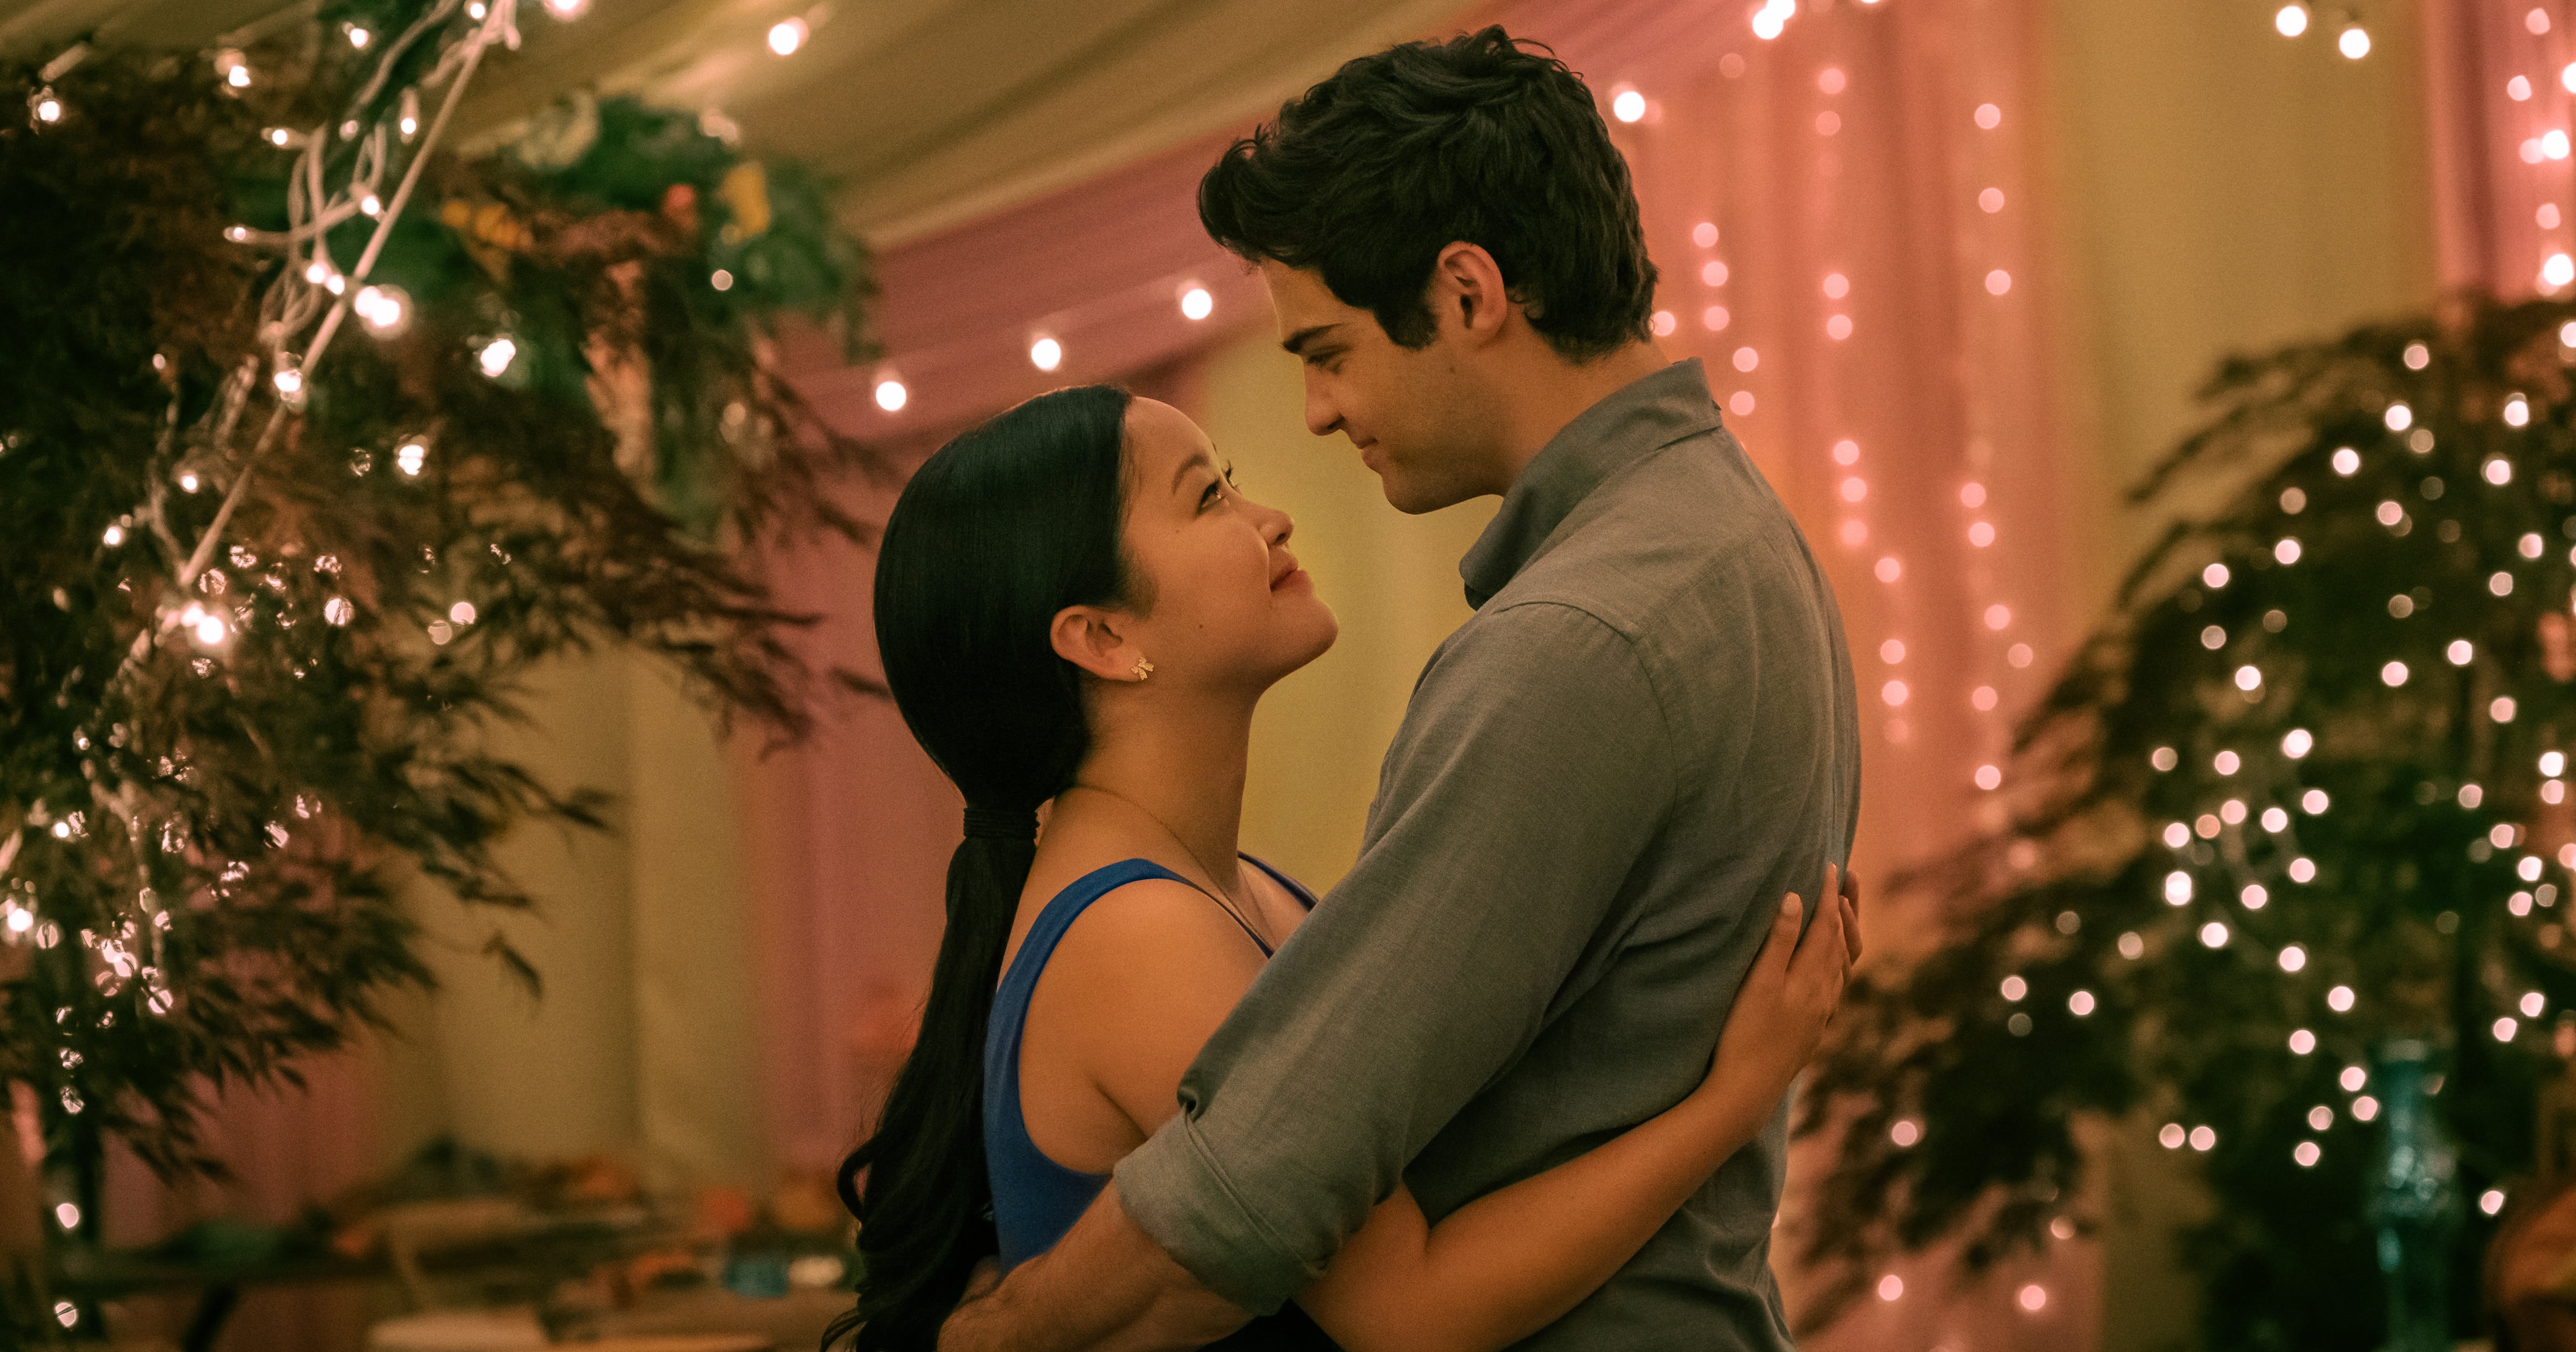 50 Best Romantic Movies on Netflix 2023 - Top Romance Films Streaming Now